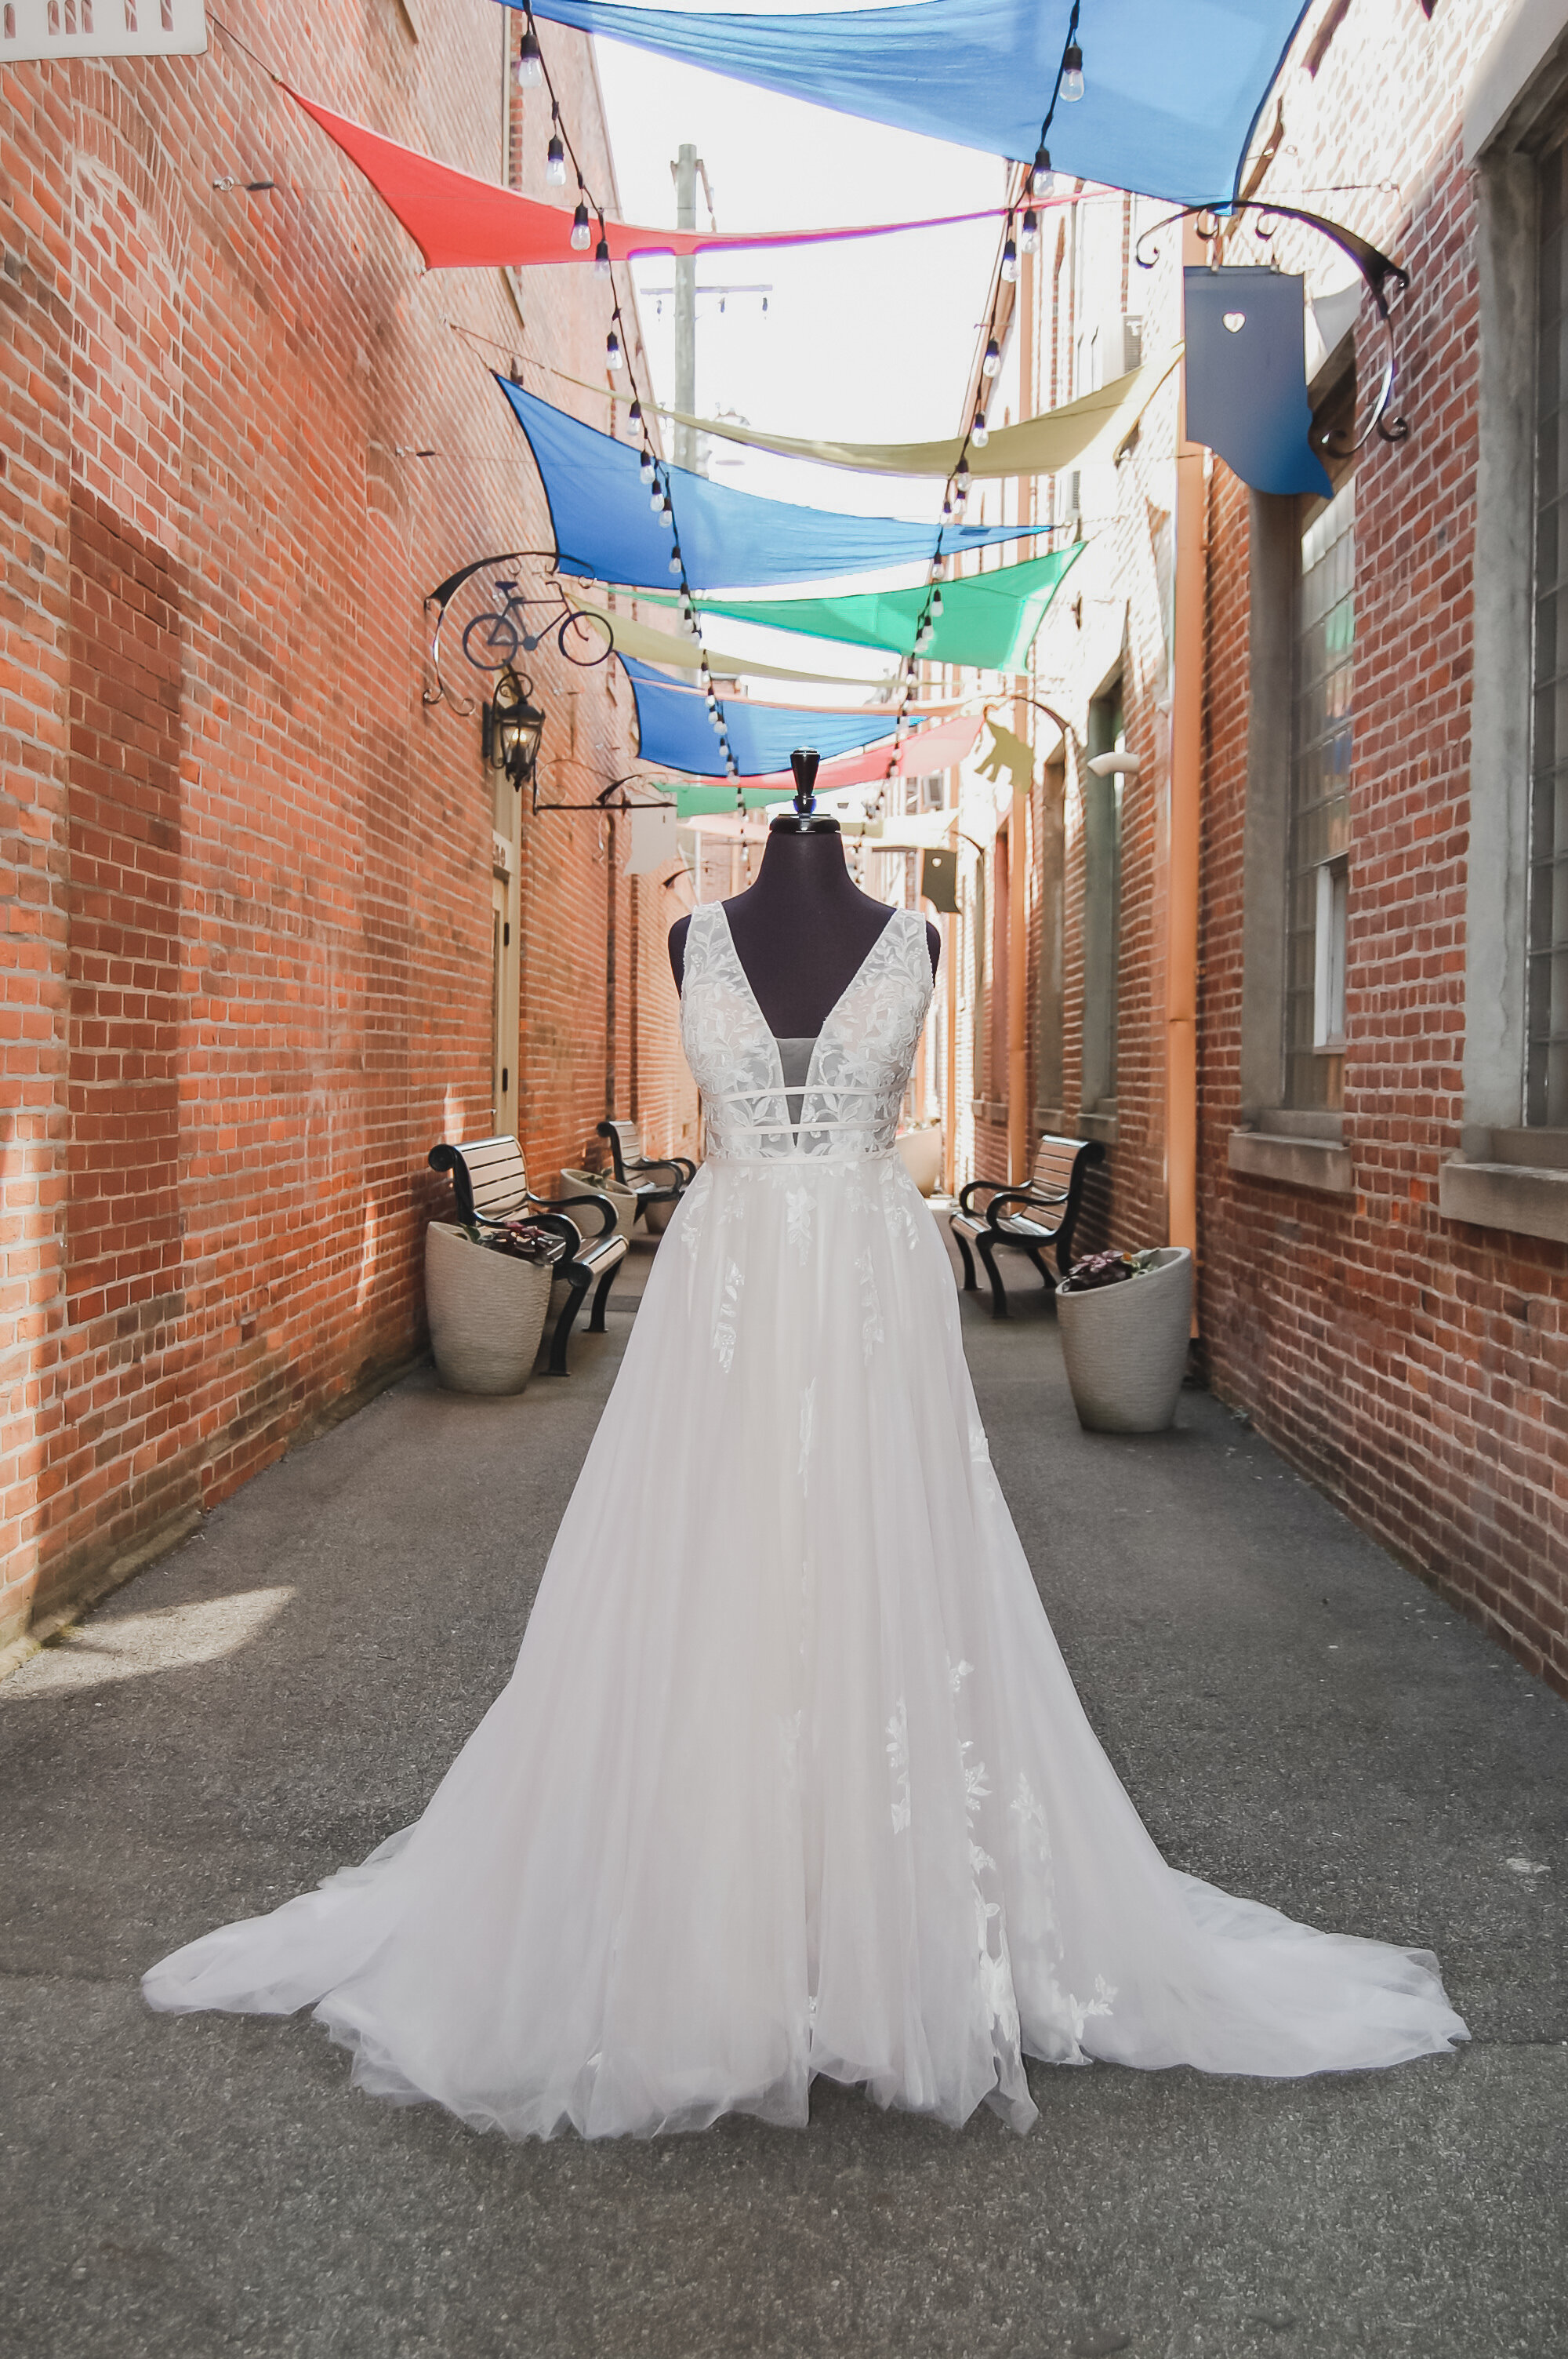 wedding dress silhouette styles